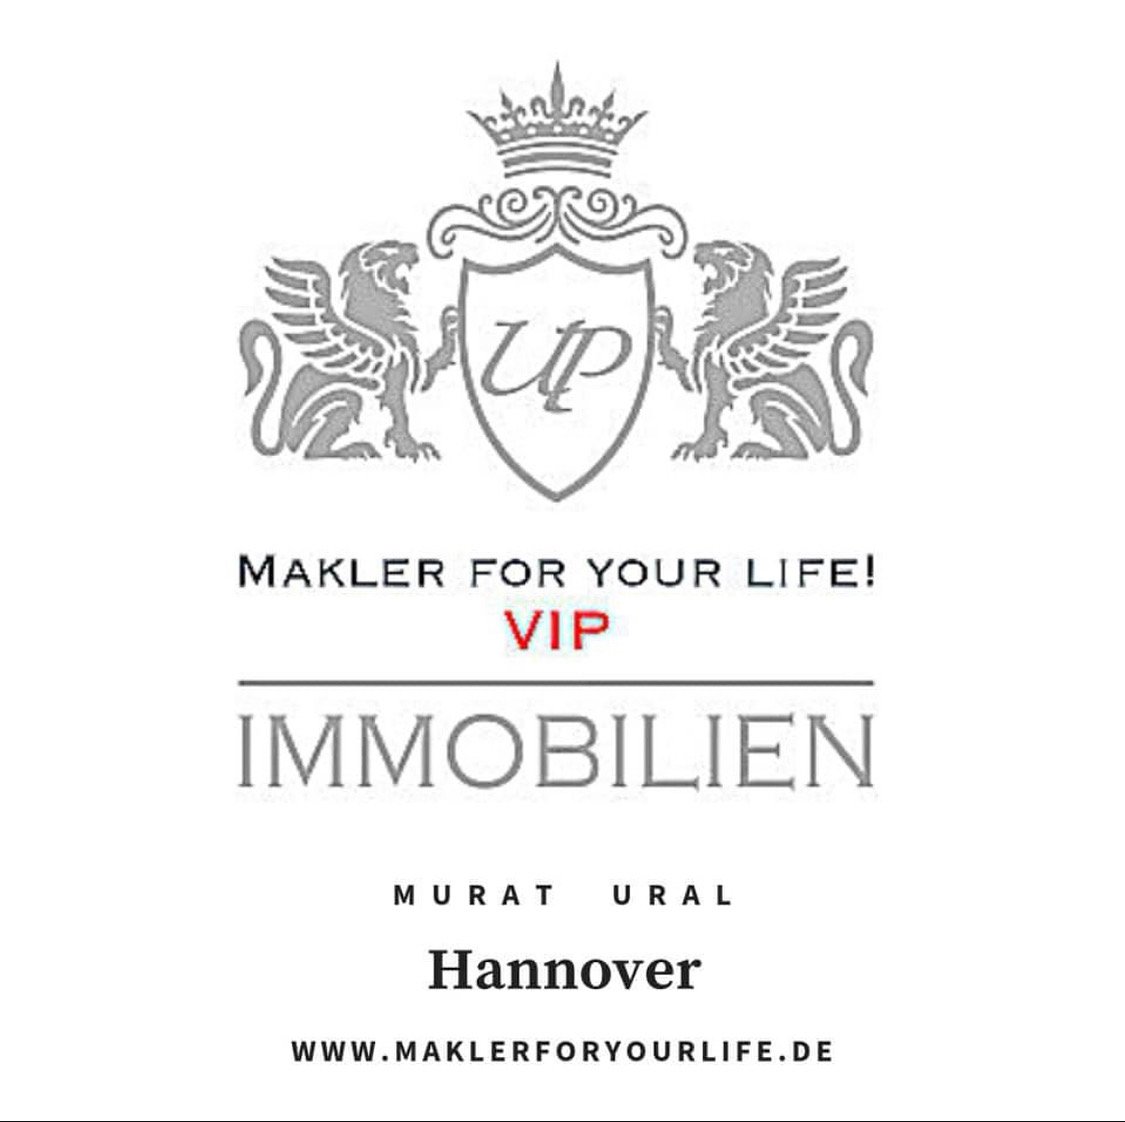 UP Makler for your Life! Immobilien